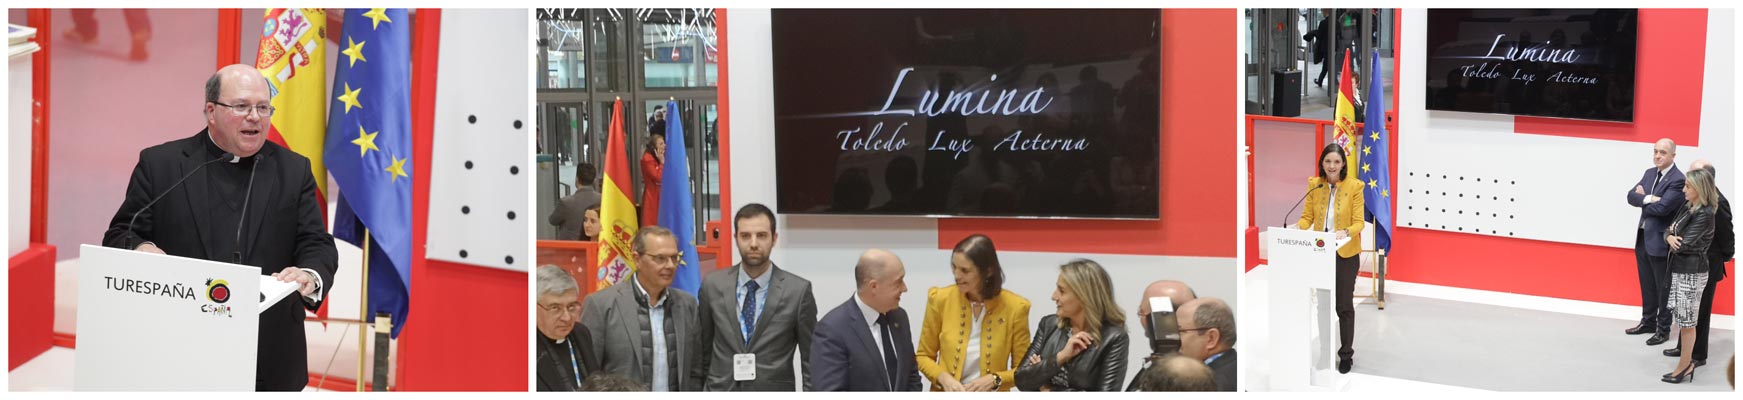 Presentación Lumina , Toledo Lux Aeterna TURESPAÑA FITUR 2020